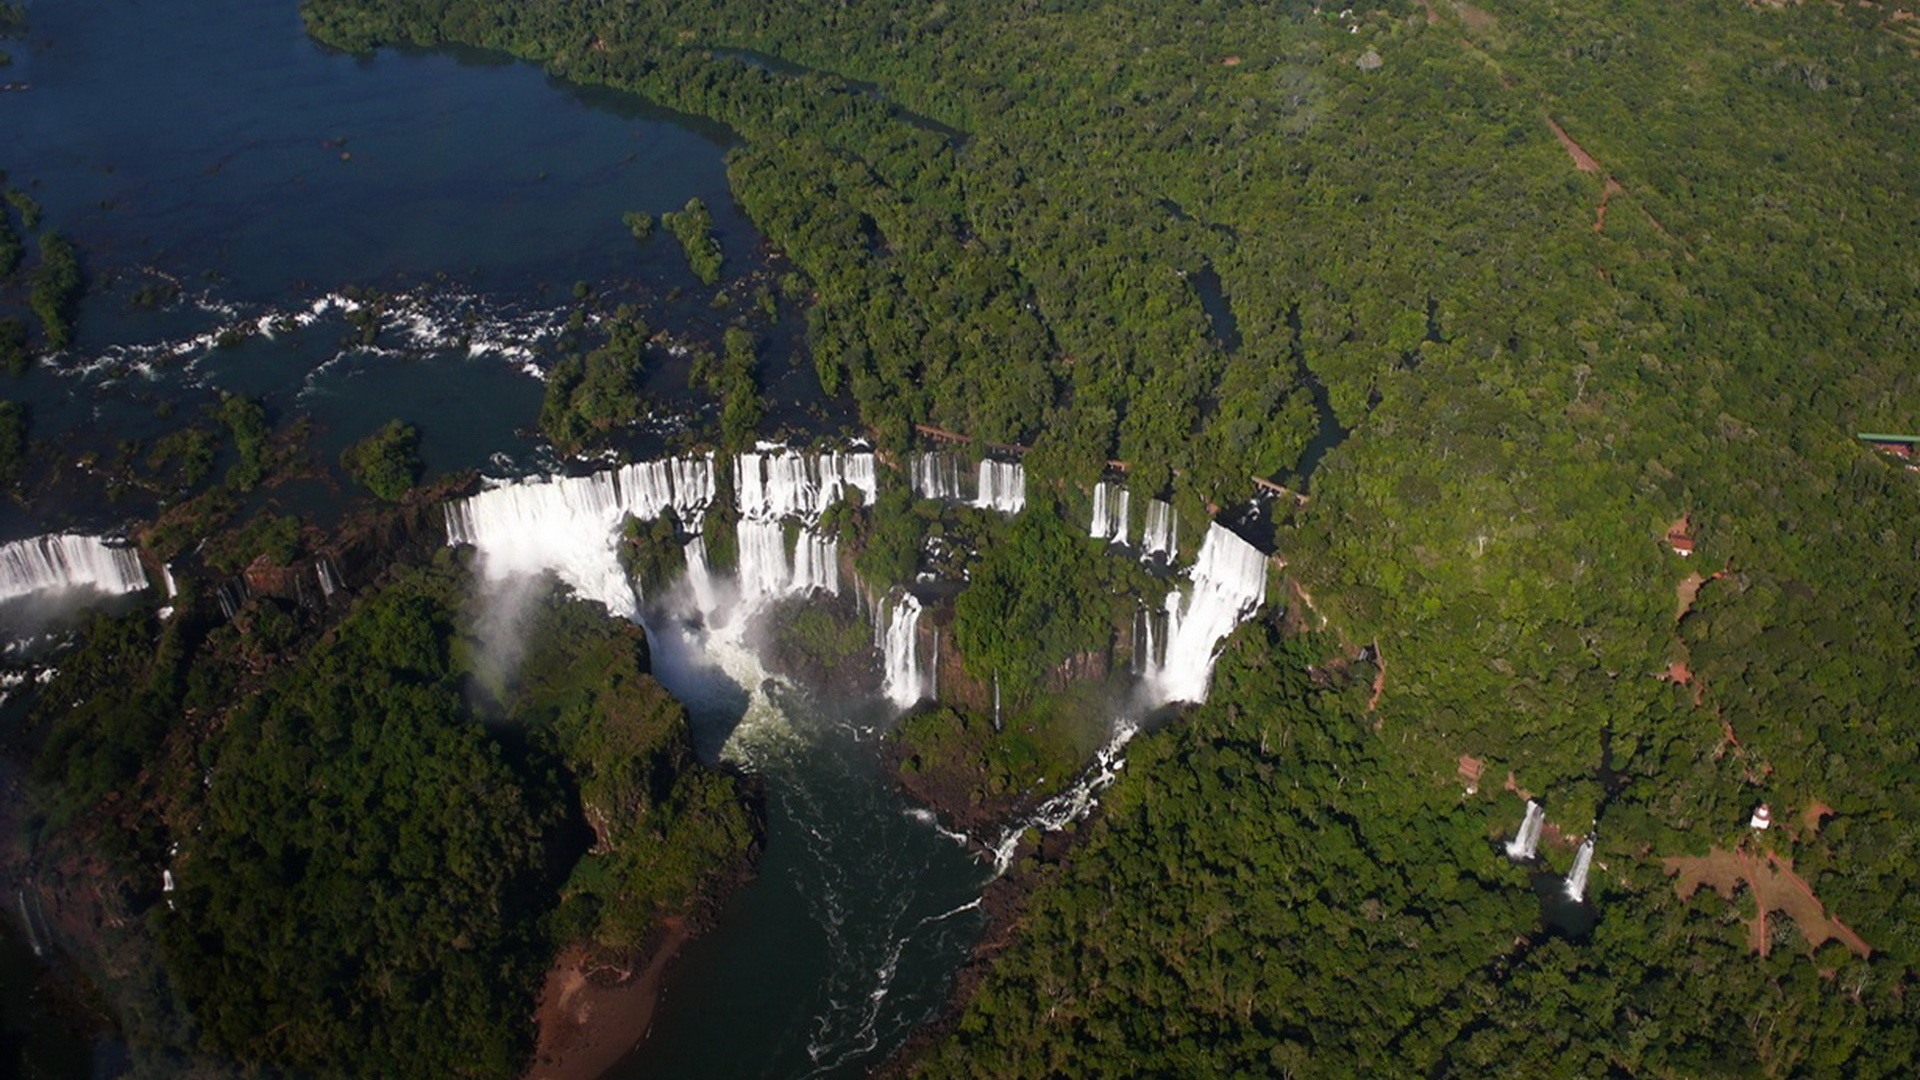 водопады игуасу, чудеса природы, красота, вода, зелень, природа